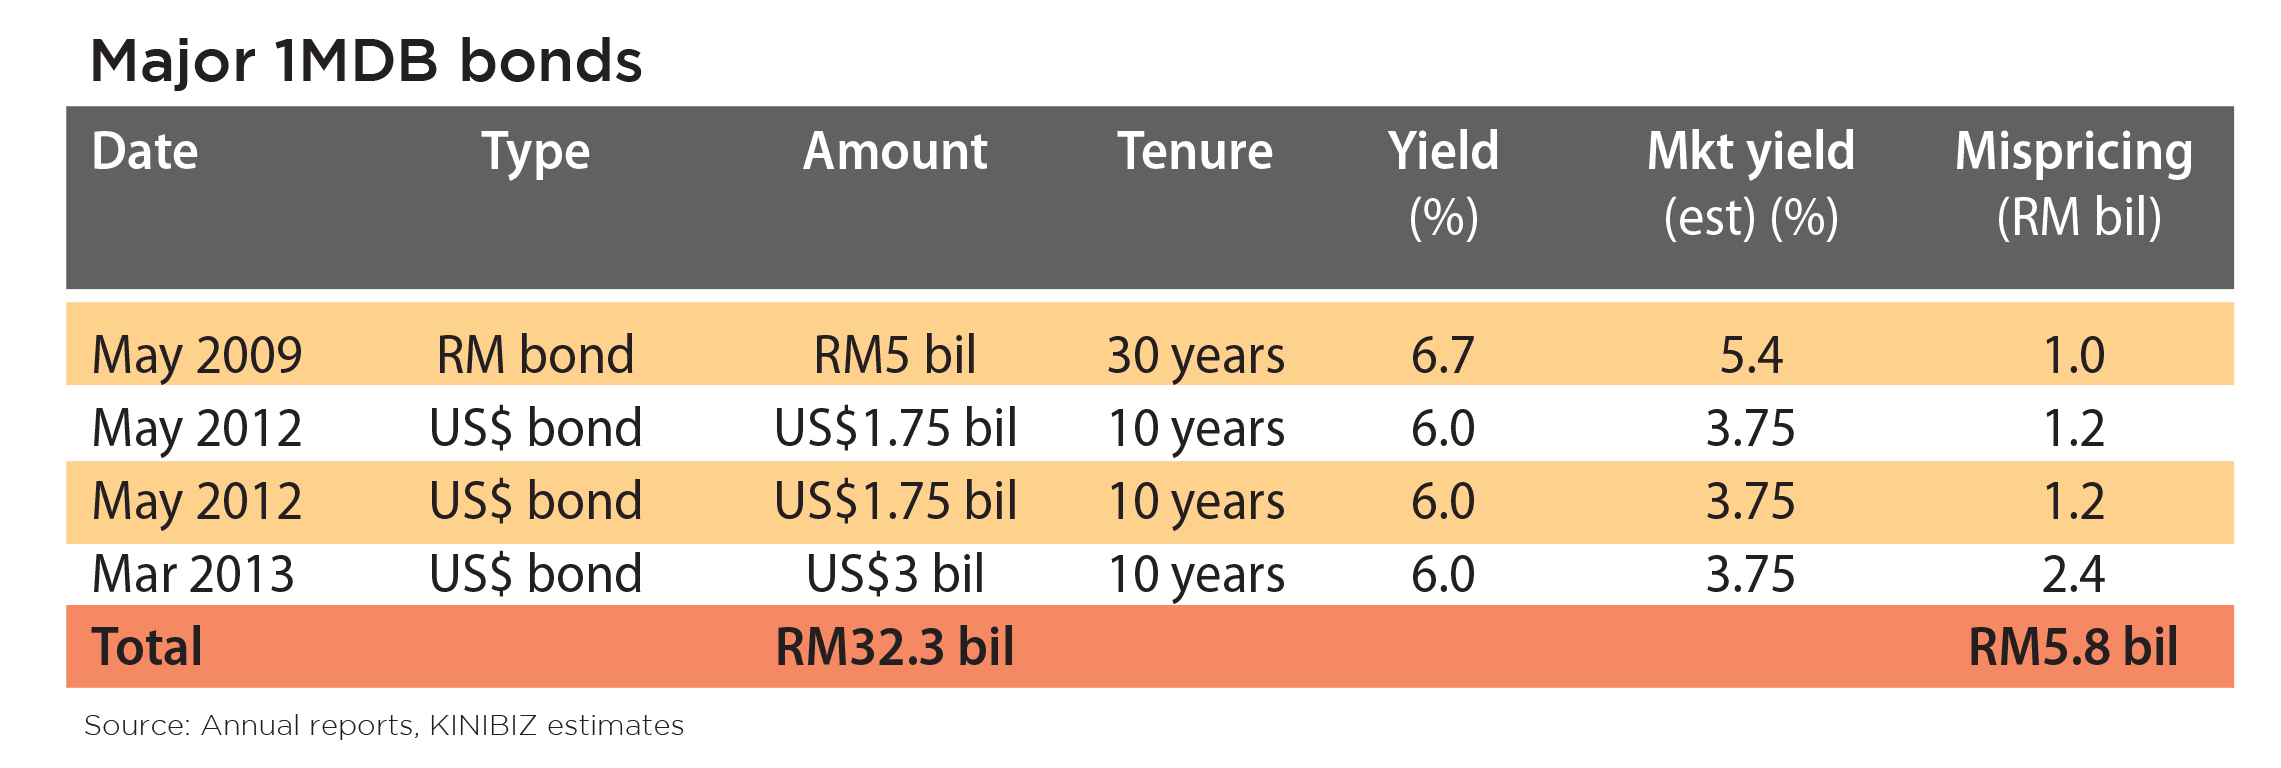 Major 1MDB bonds